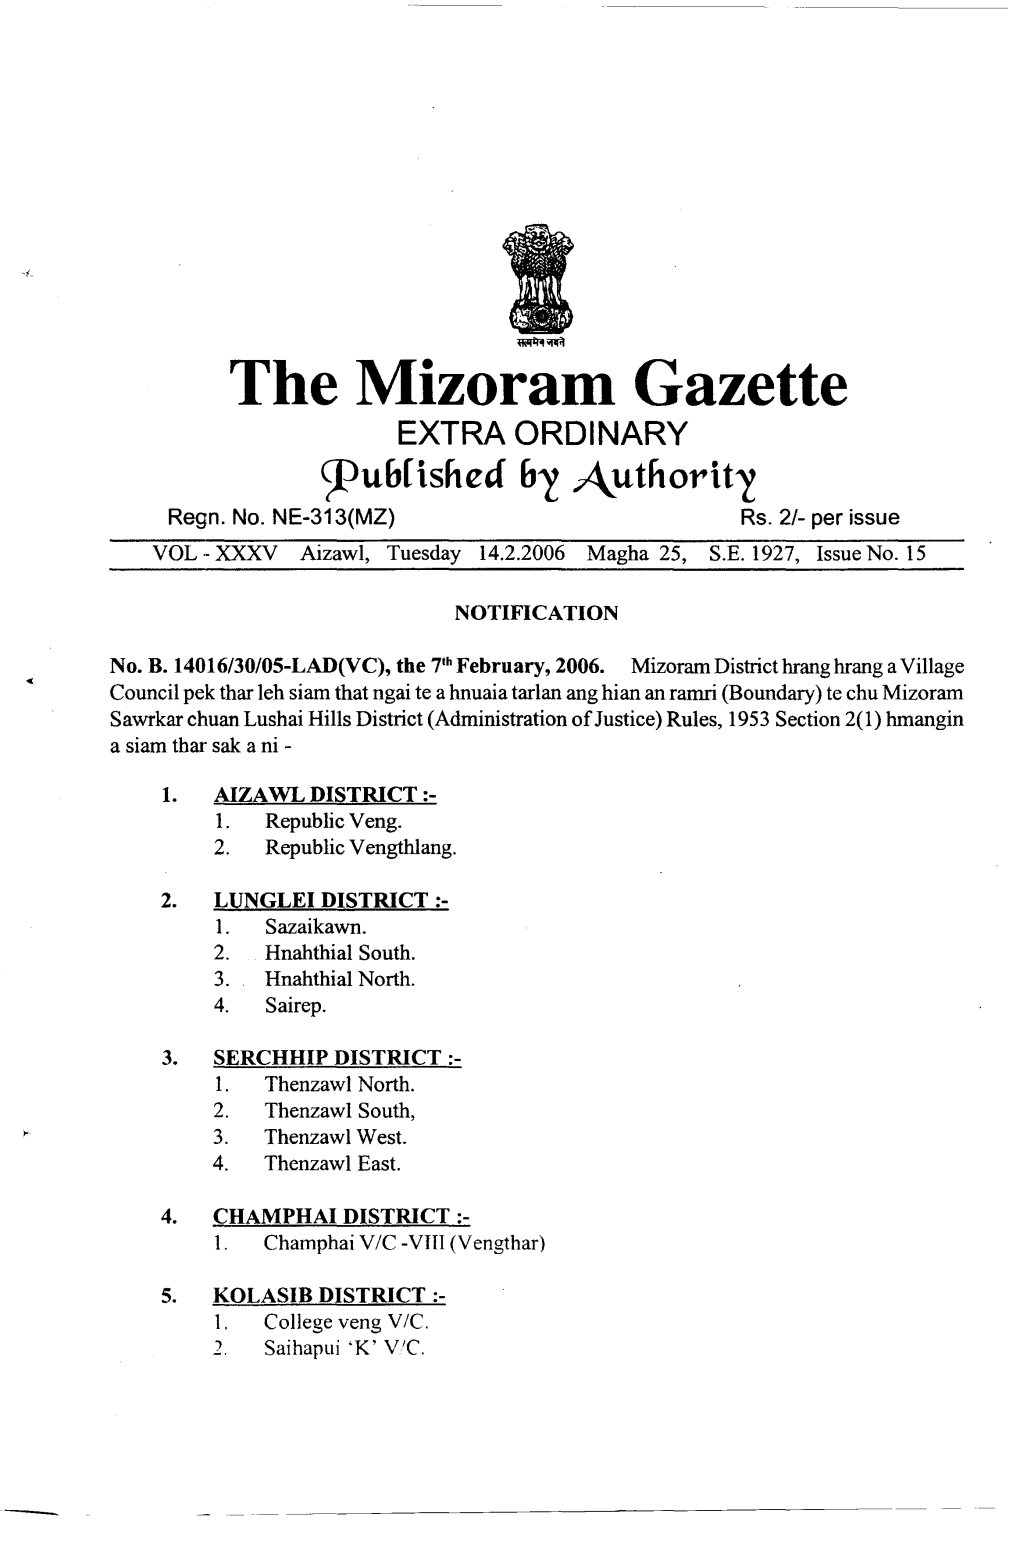 The Mizoram Gazette EXTRA ORDINARY Wu&Fisfted &! ,Autftorit! Regn